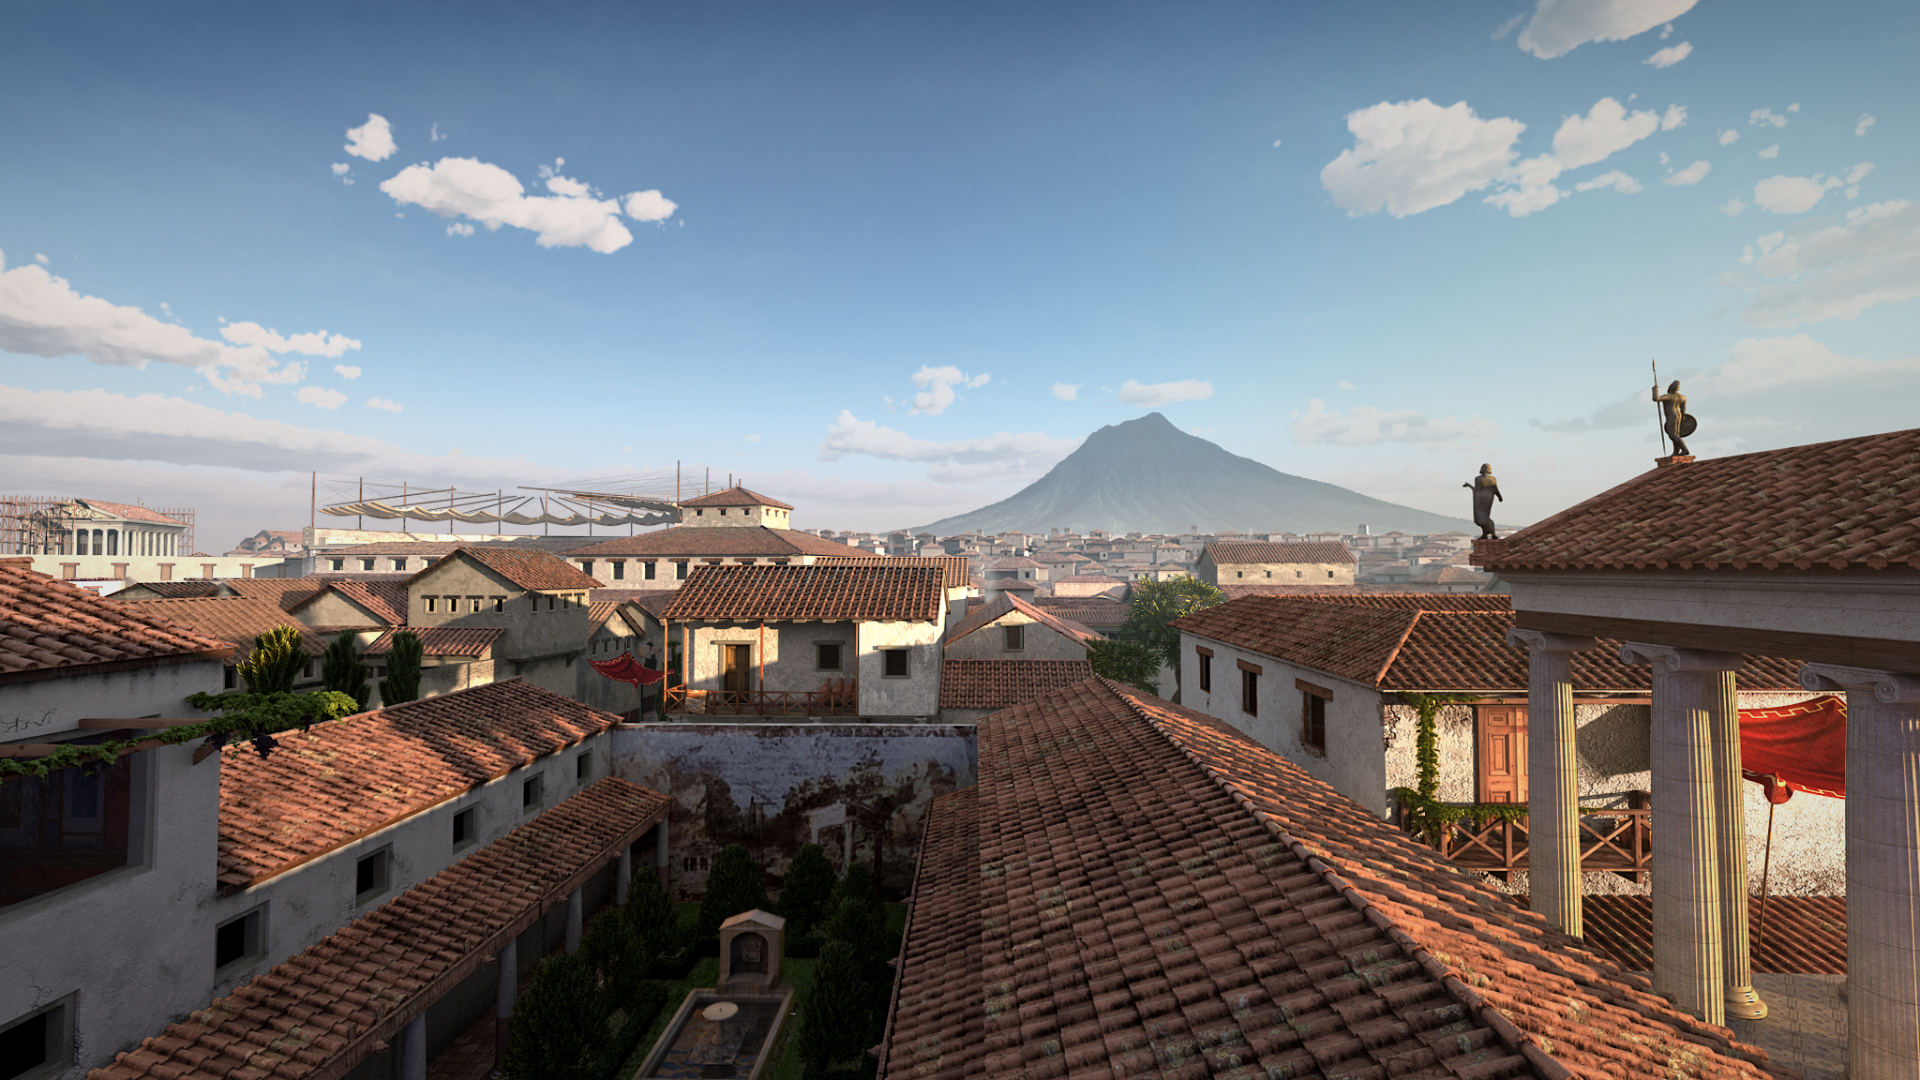 Pompeii Cinematic Image Before the Eruption